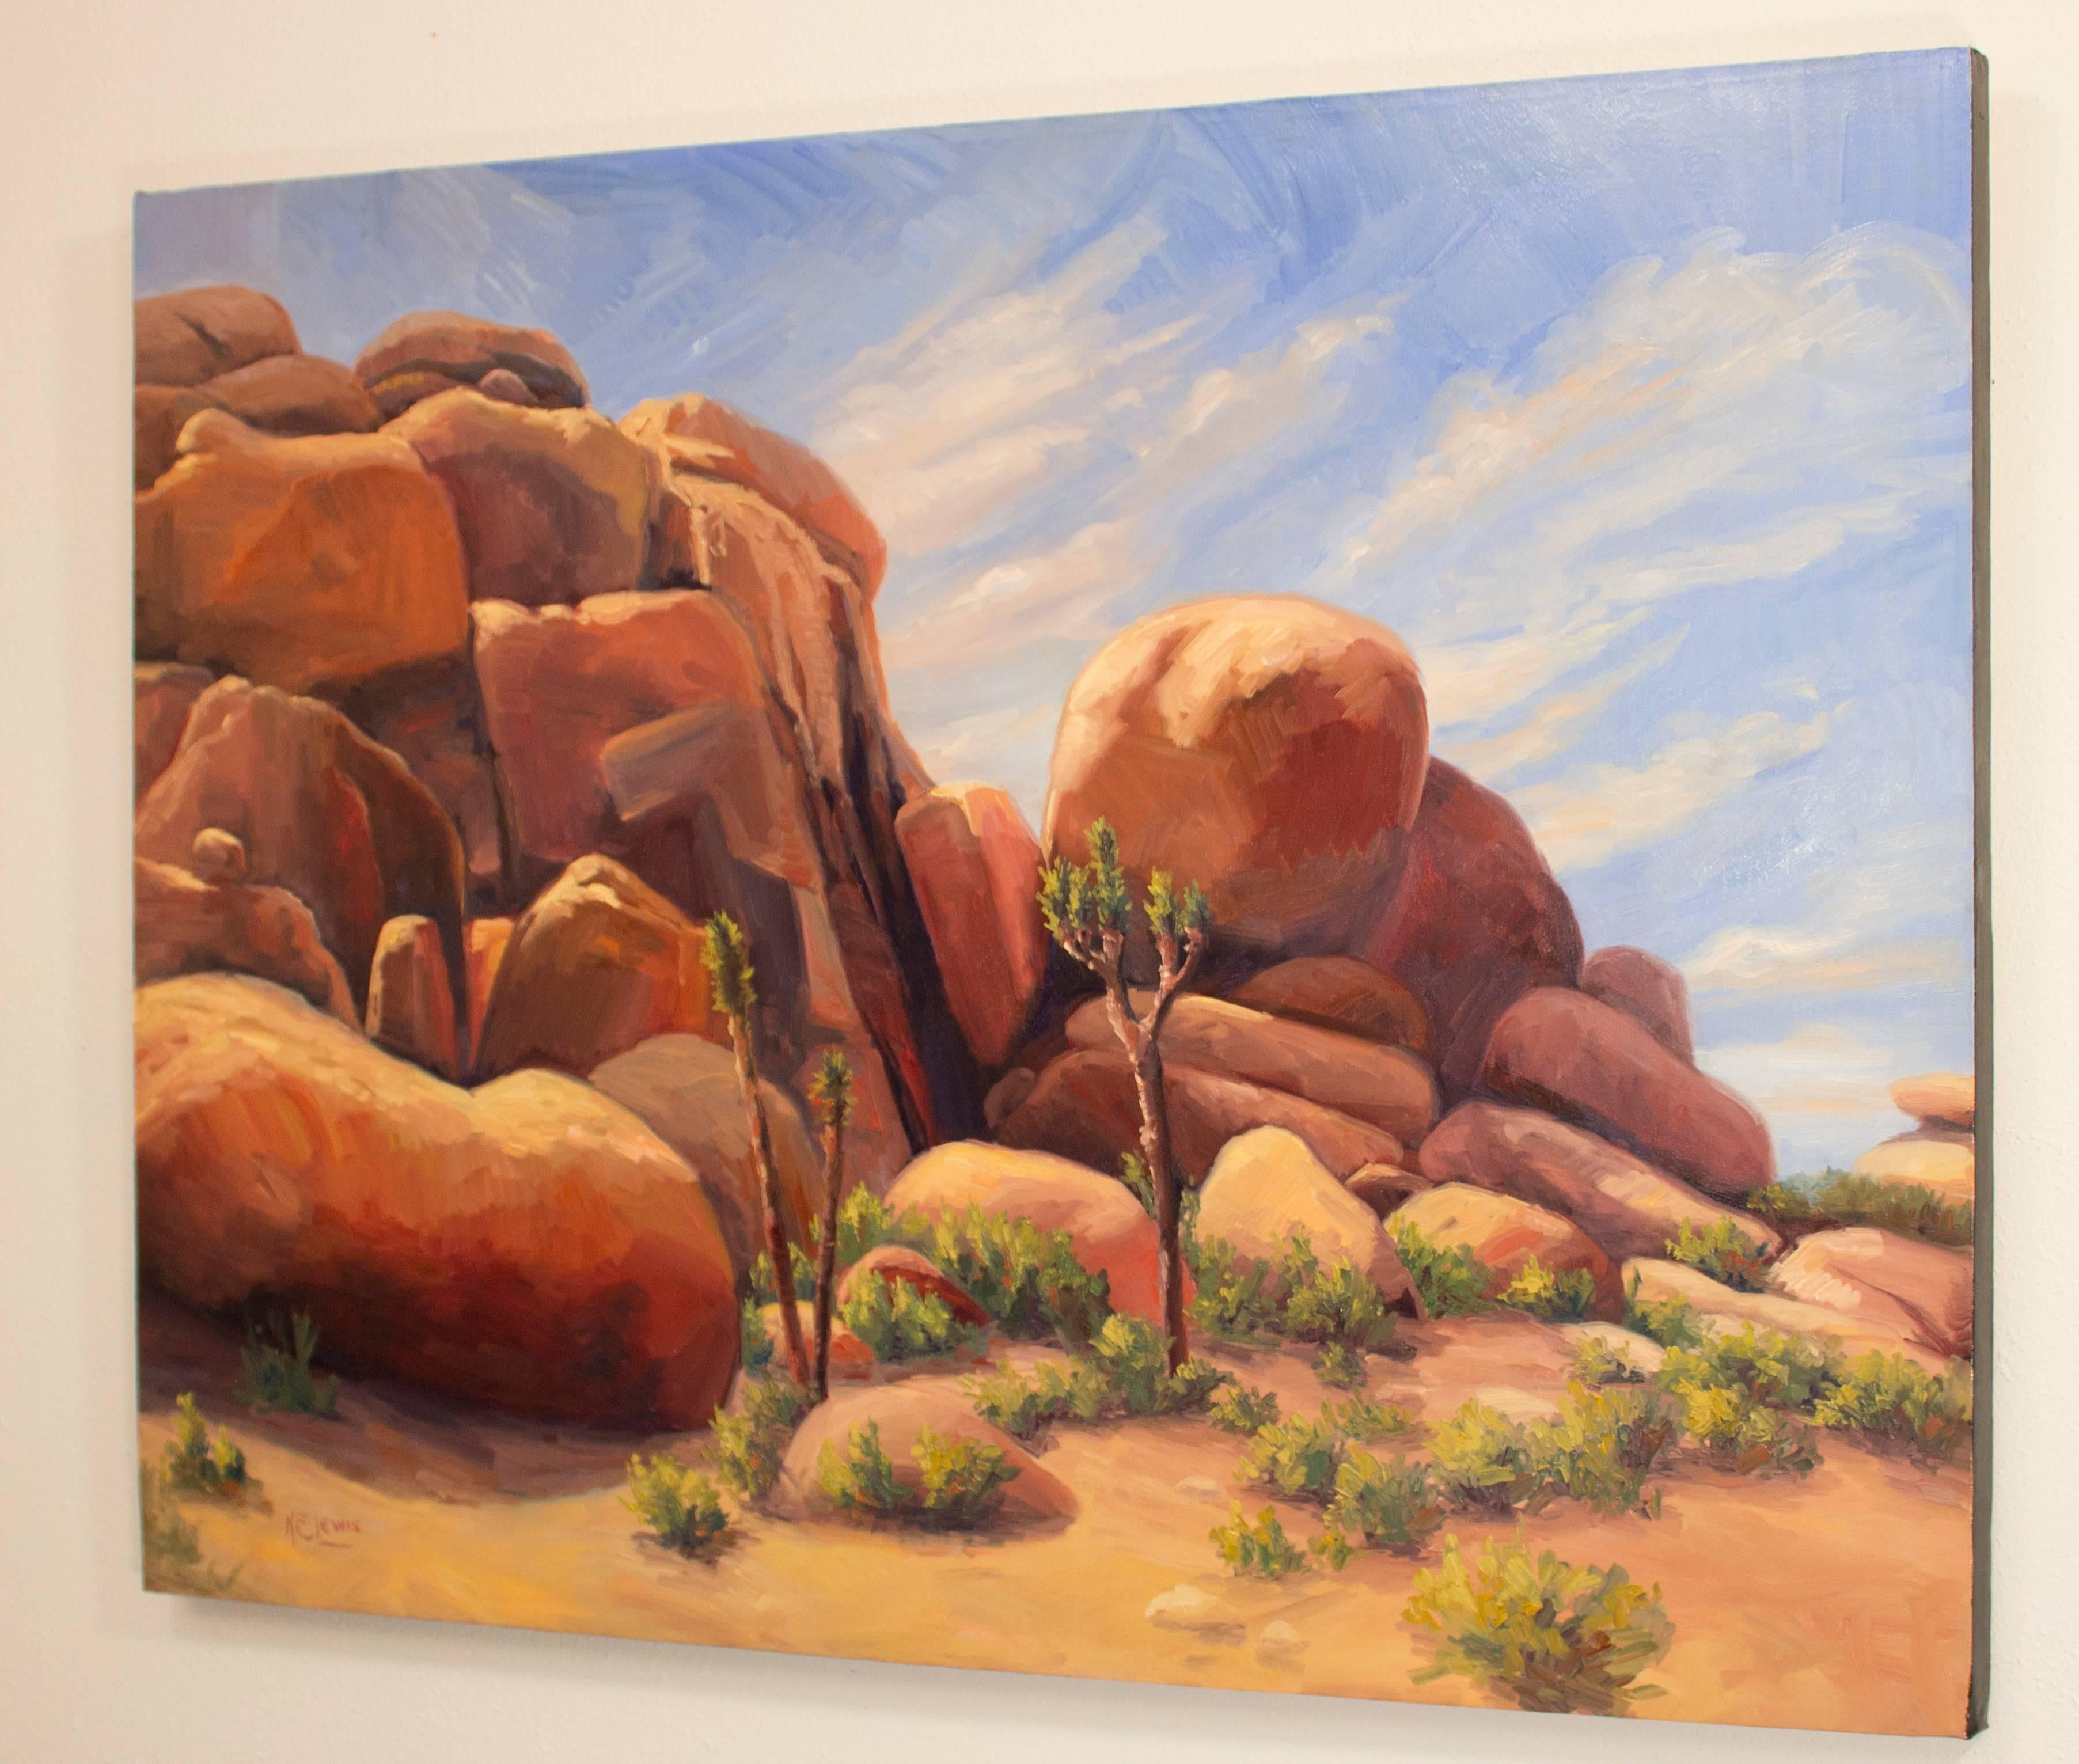 Desert Rock and Joshua Tree - Painting by Karen E. Lewis